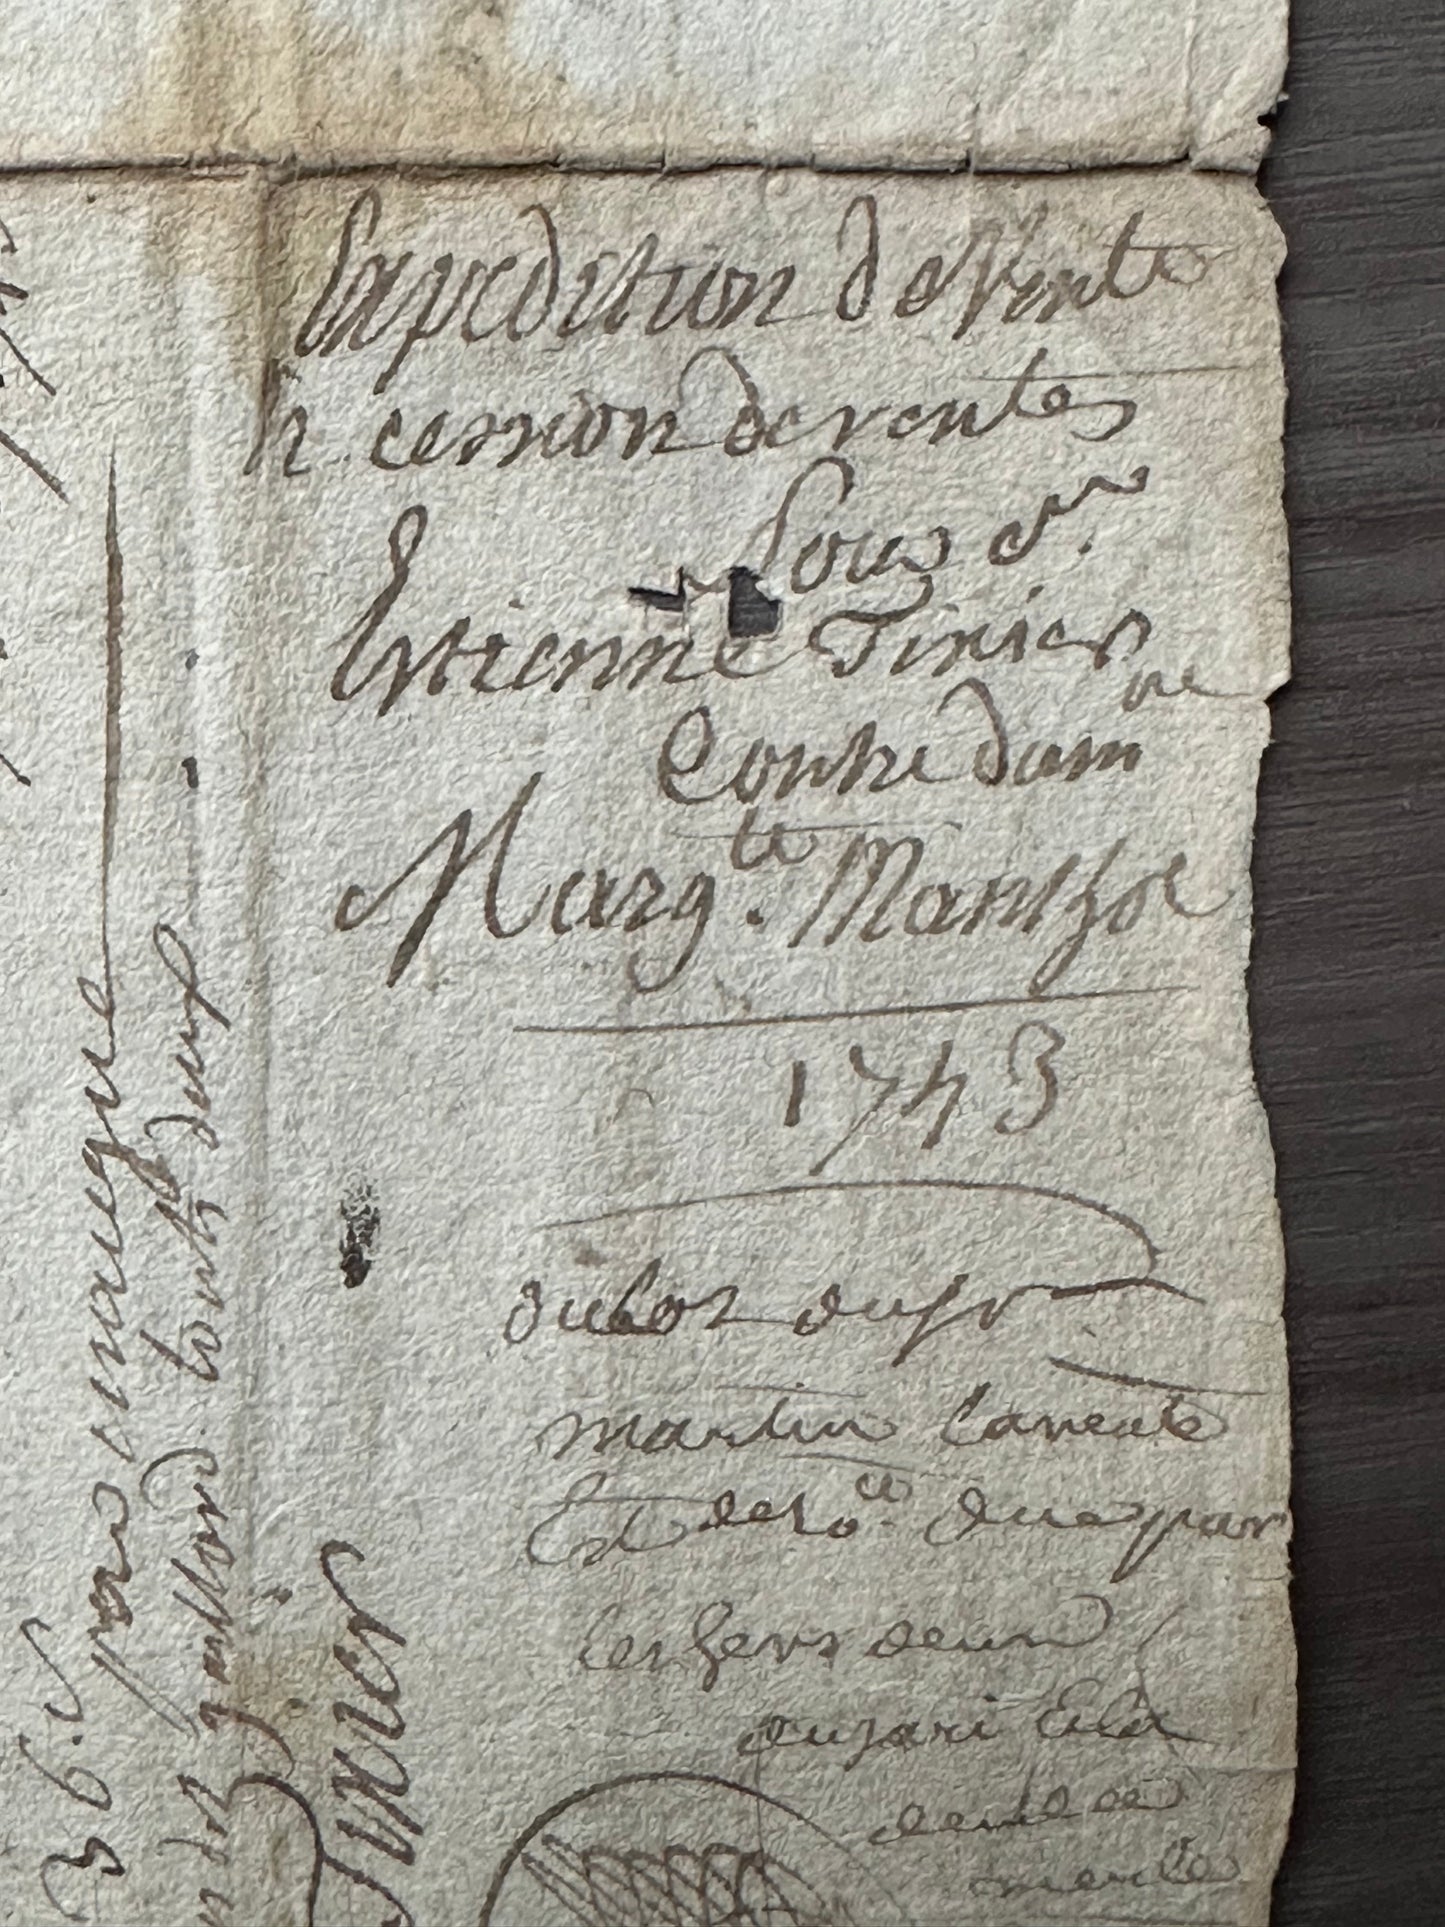 1743 French Manuscript